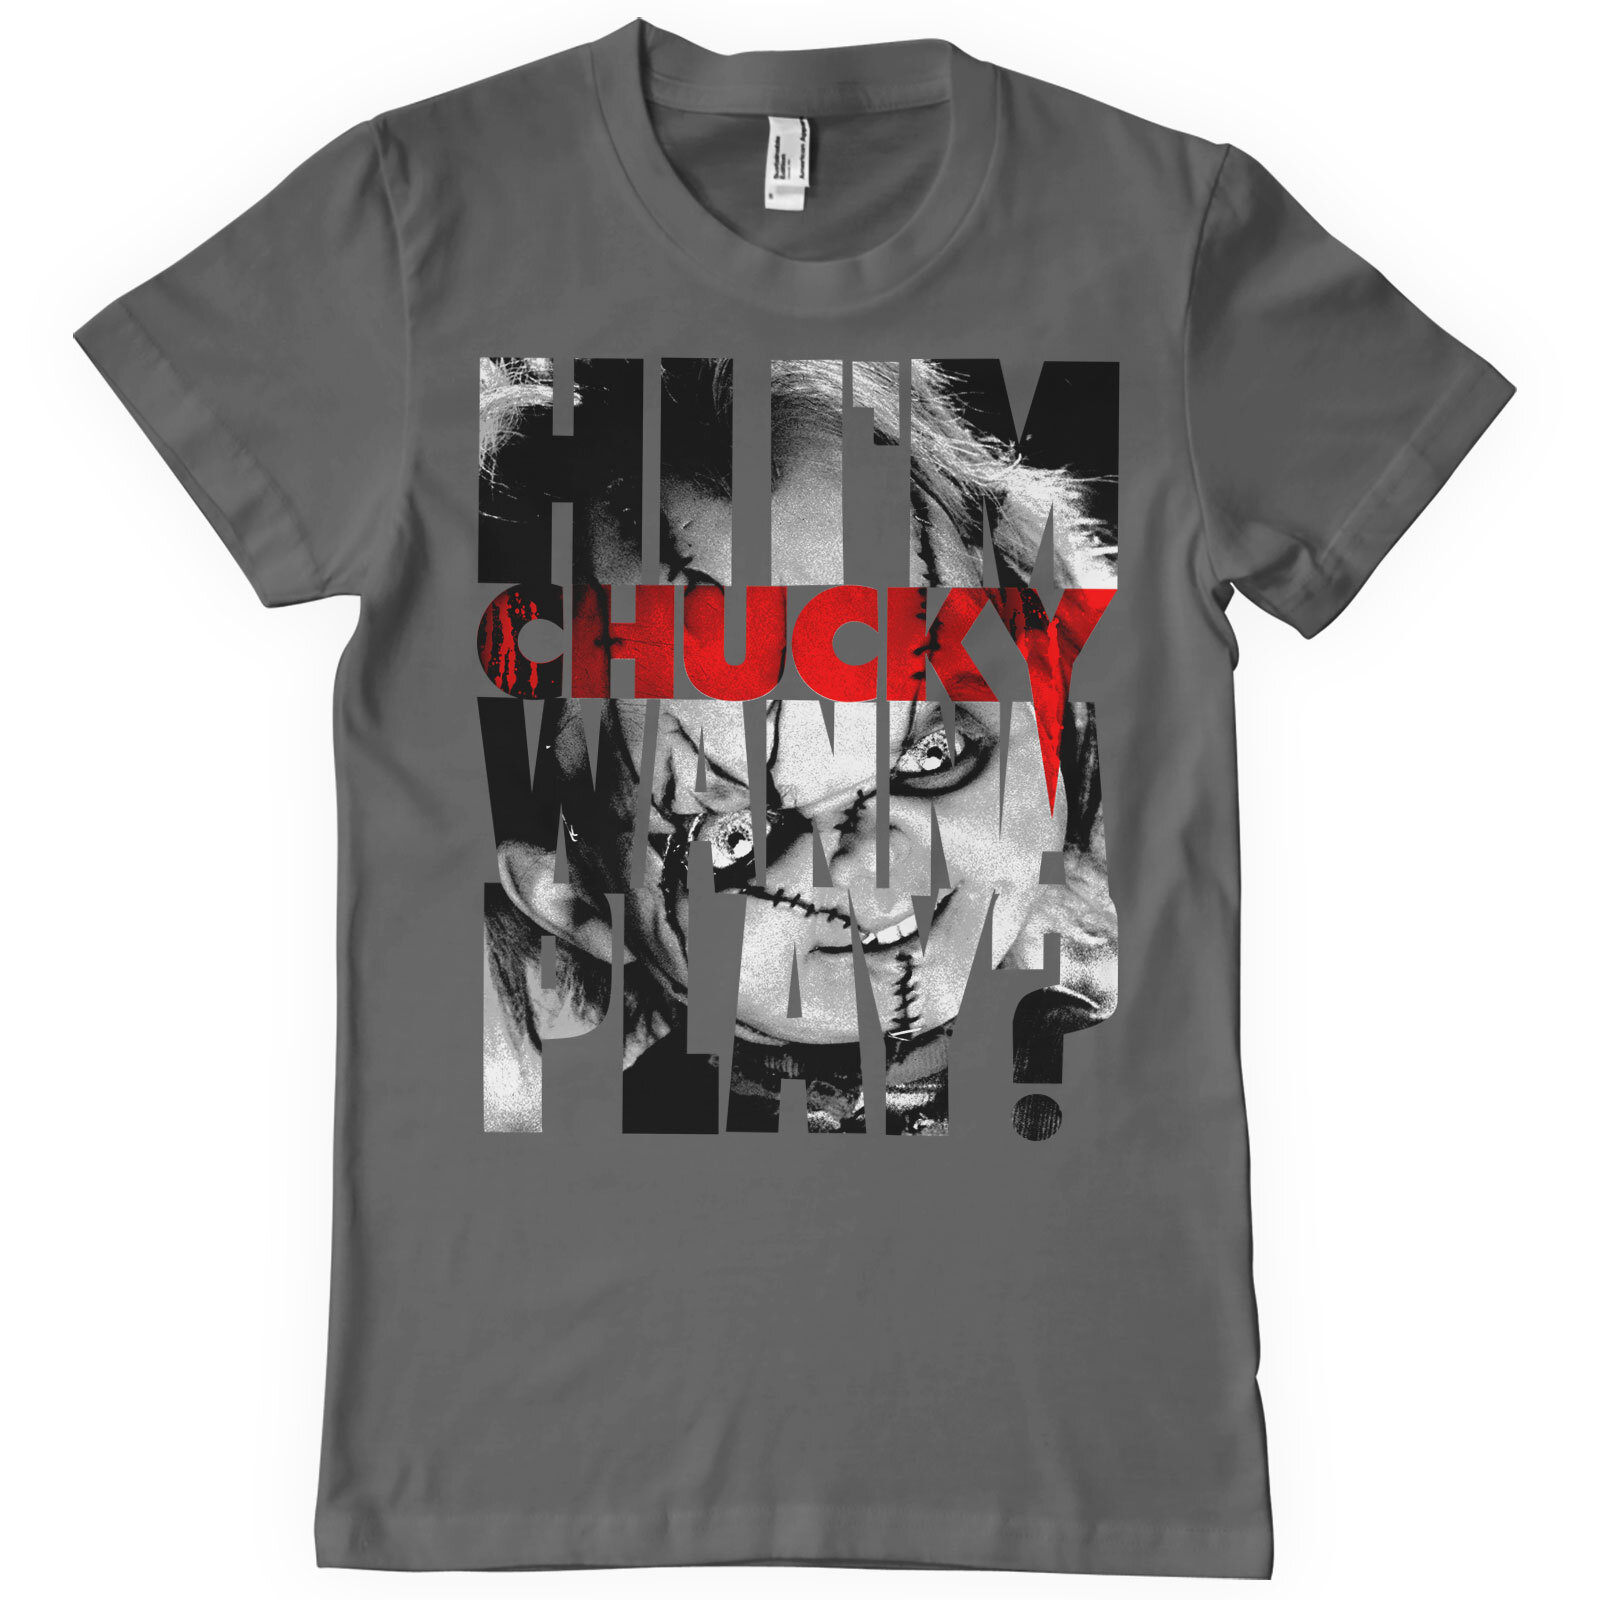 Chucky - Wanna Play Cutout T-Shirt